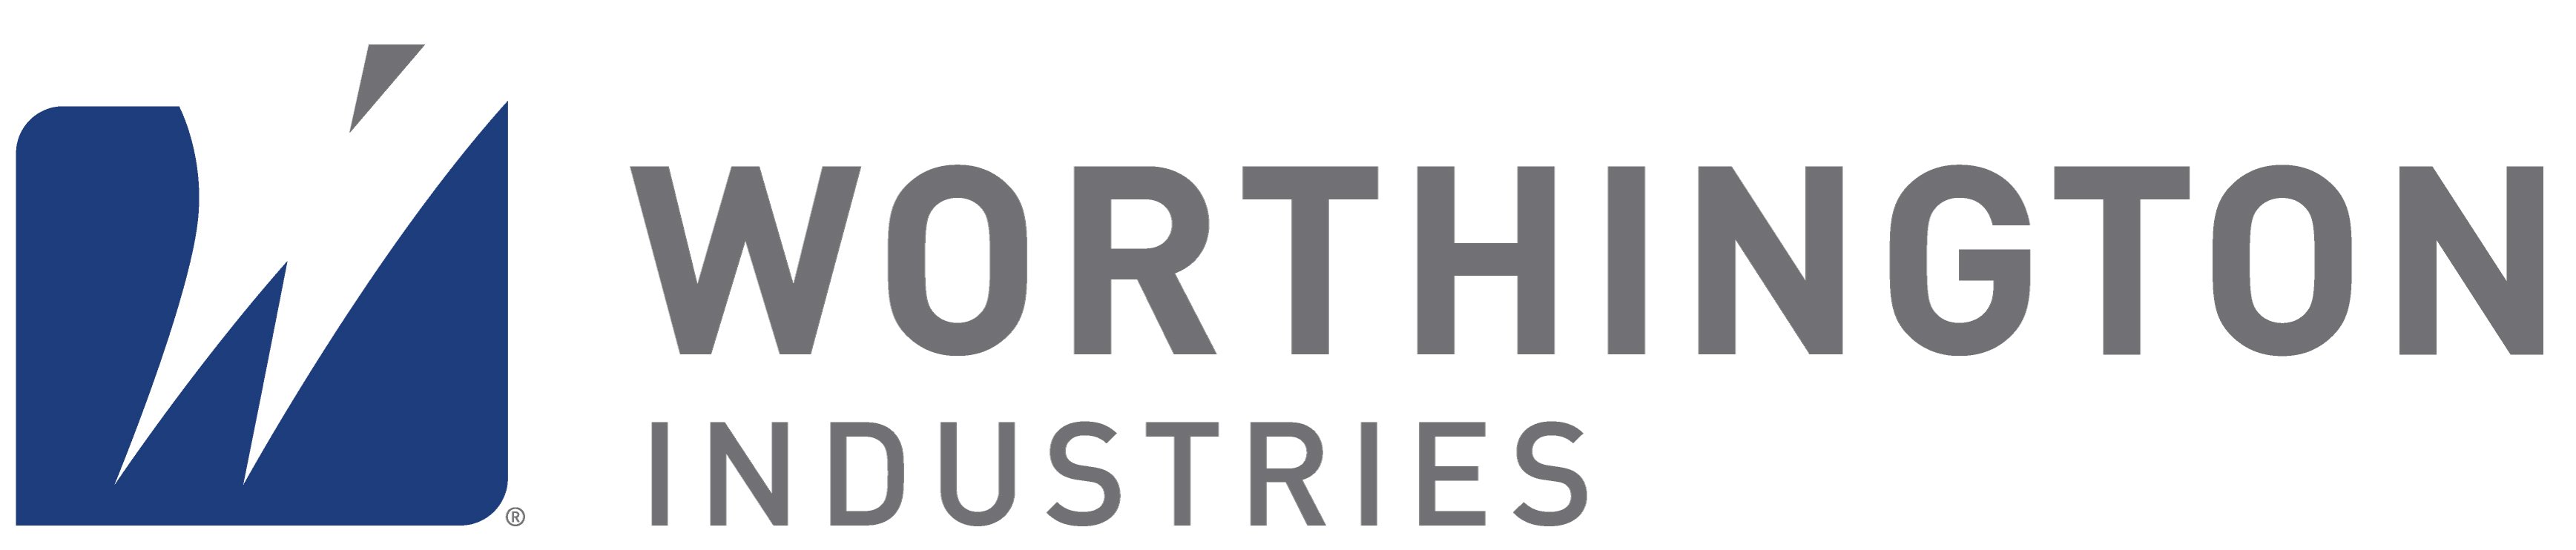 Media Center - Worthington Industries